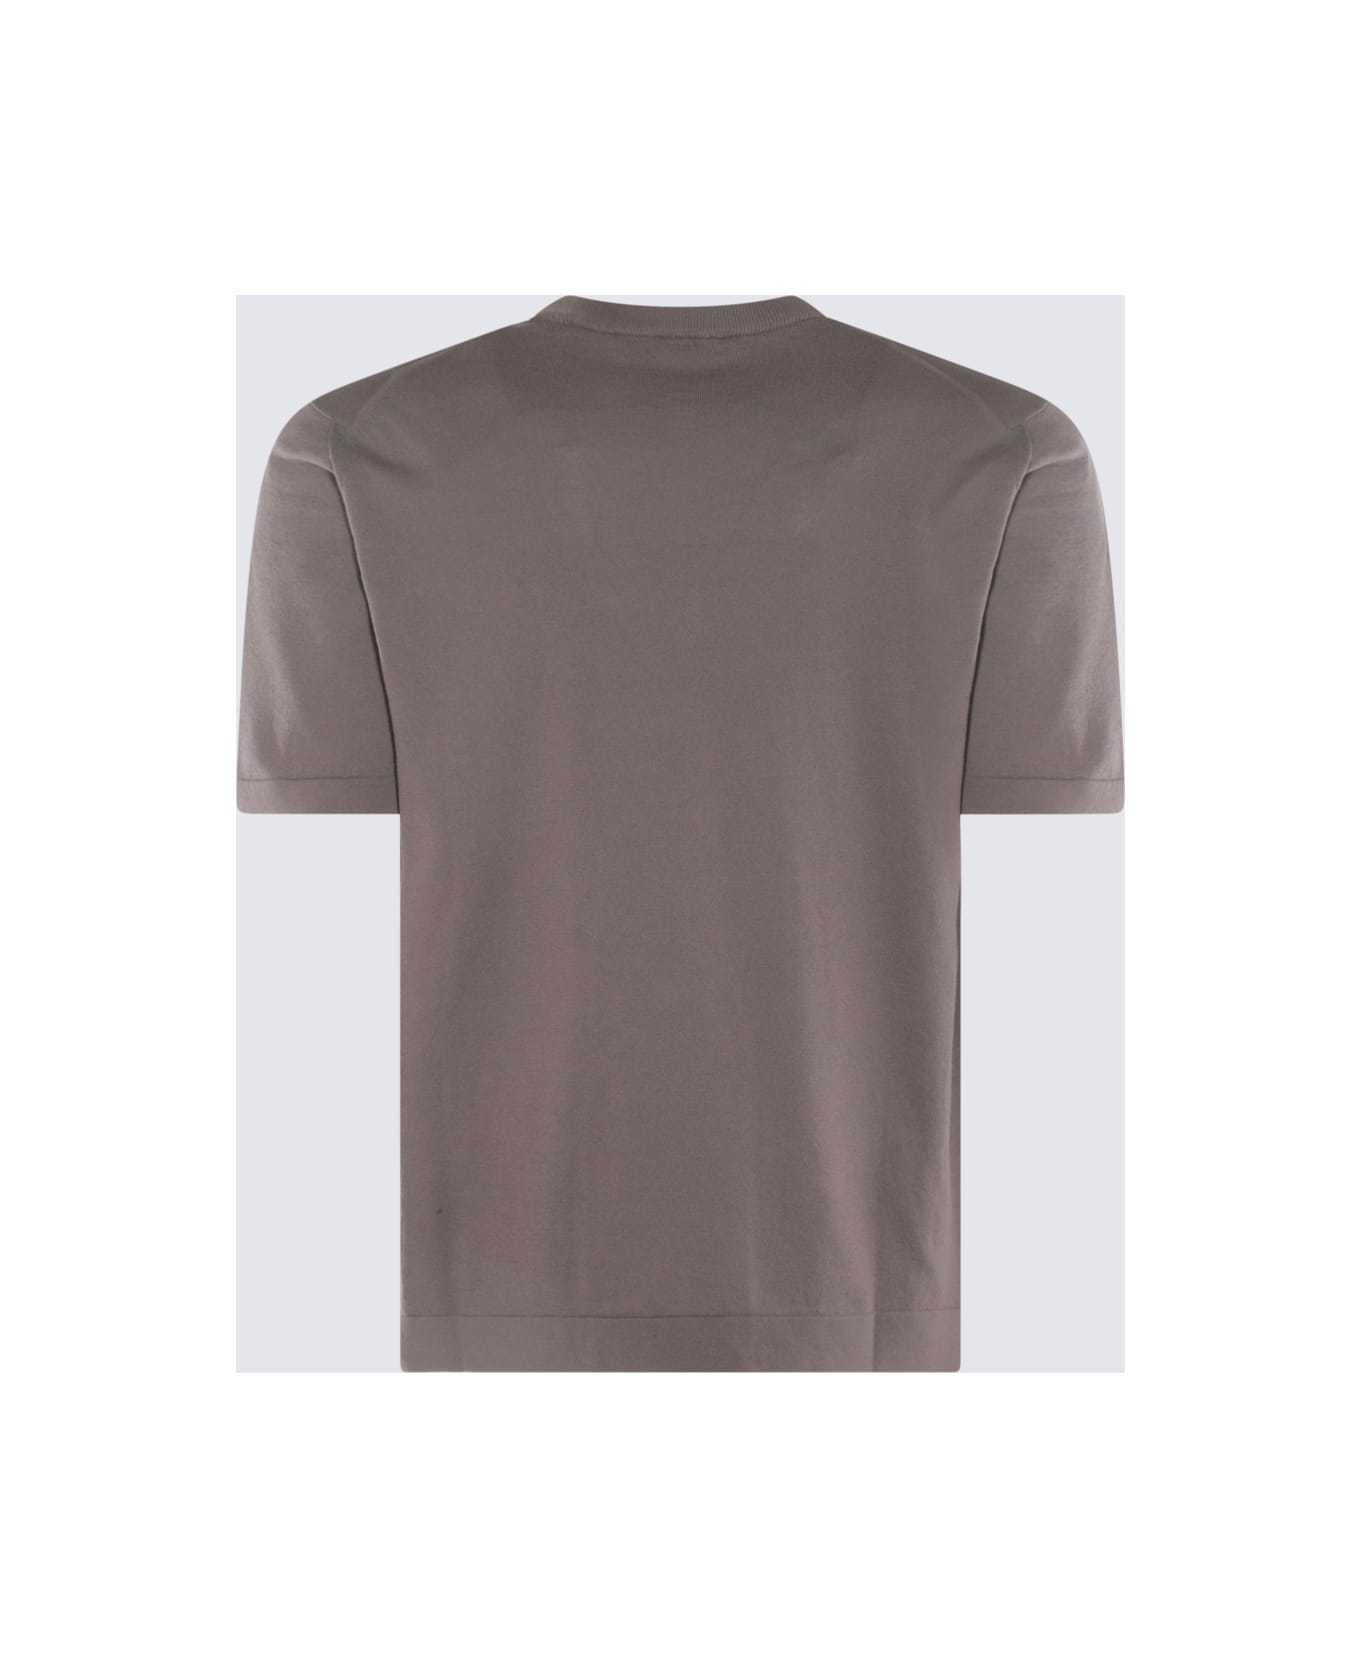 Piacenza Cashmere Stone Grey Cotton T-shirt - Stone